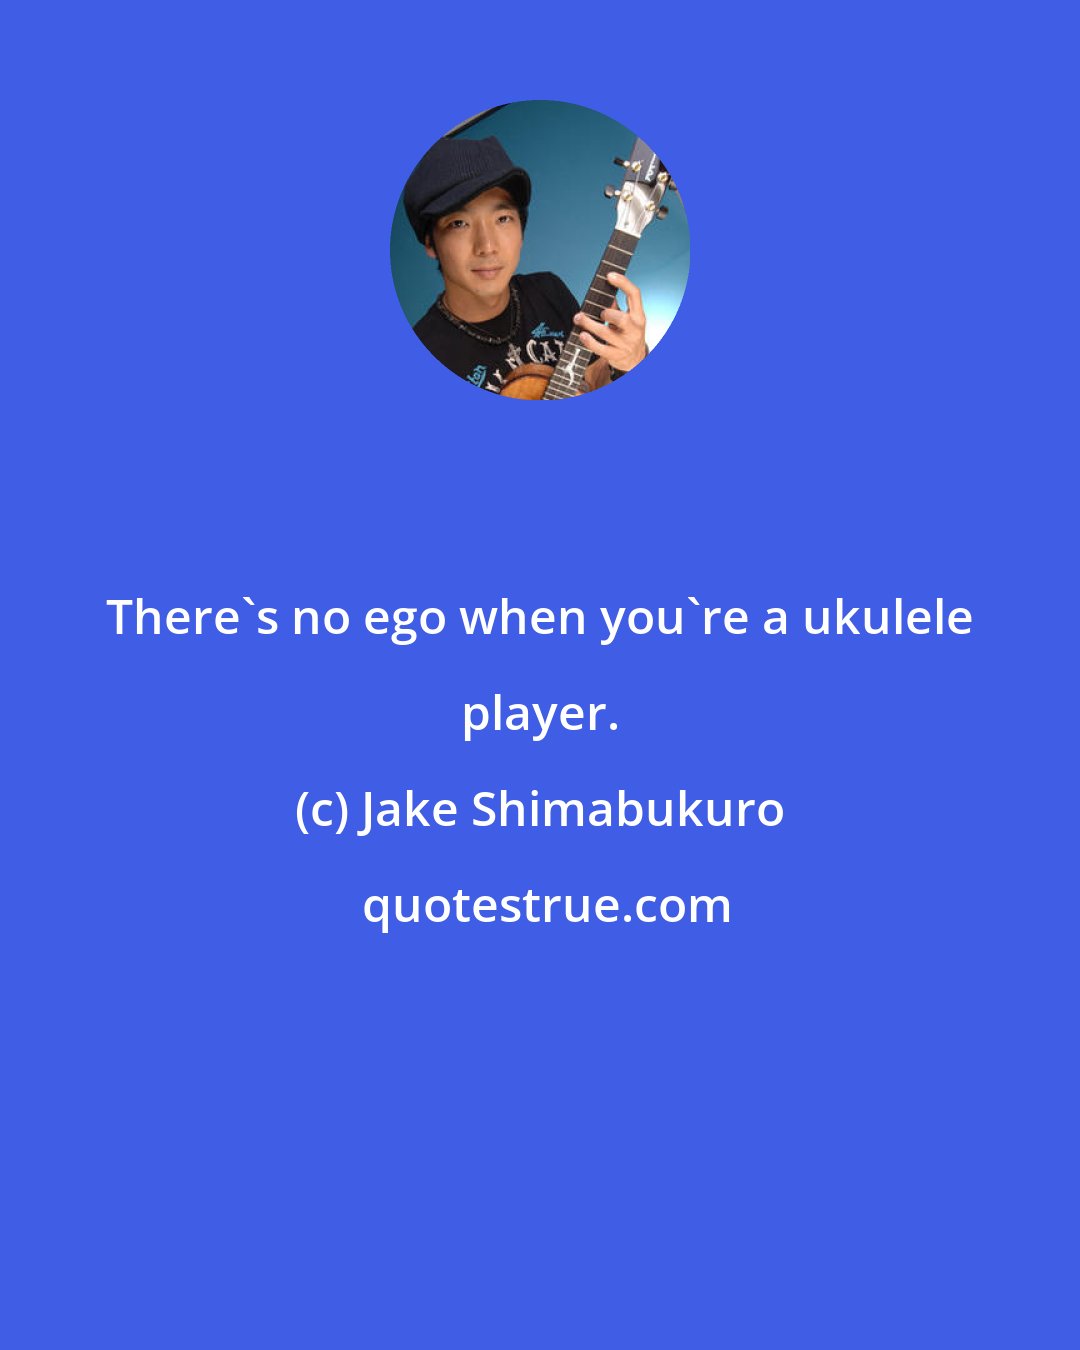 Jake Shimabukuro: There's no ego when you're a ukulele player.